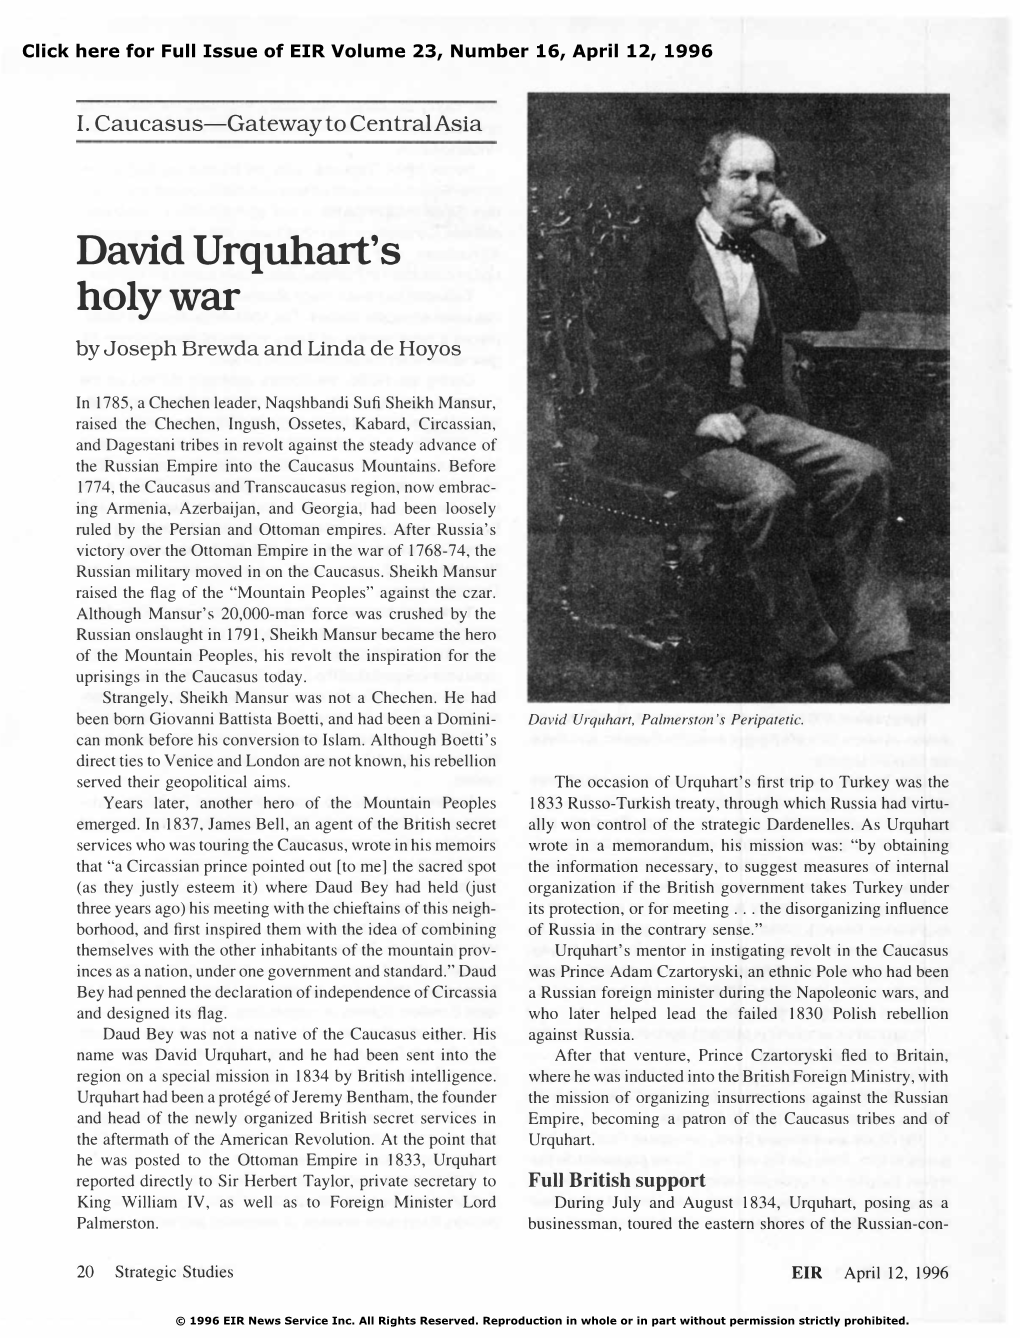 David Urquhart's Holywar